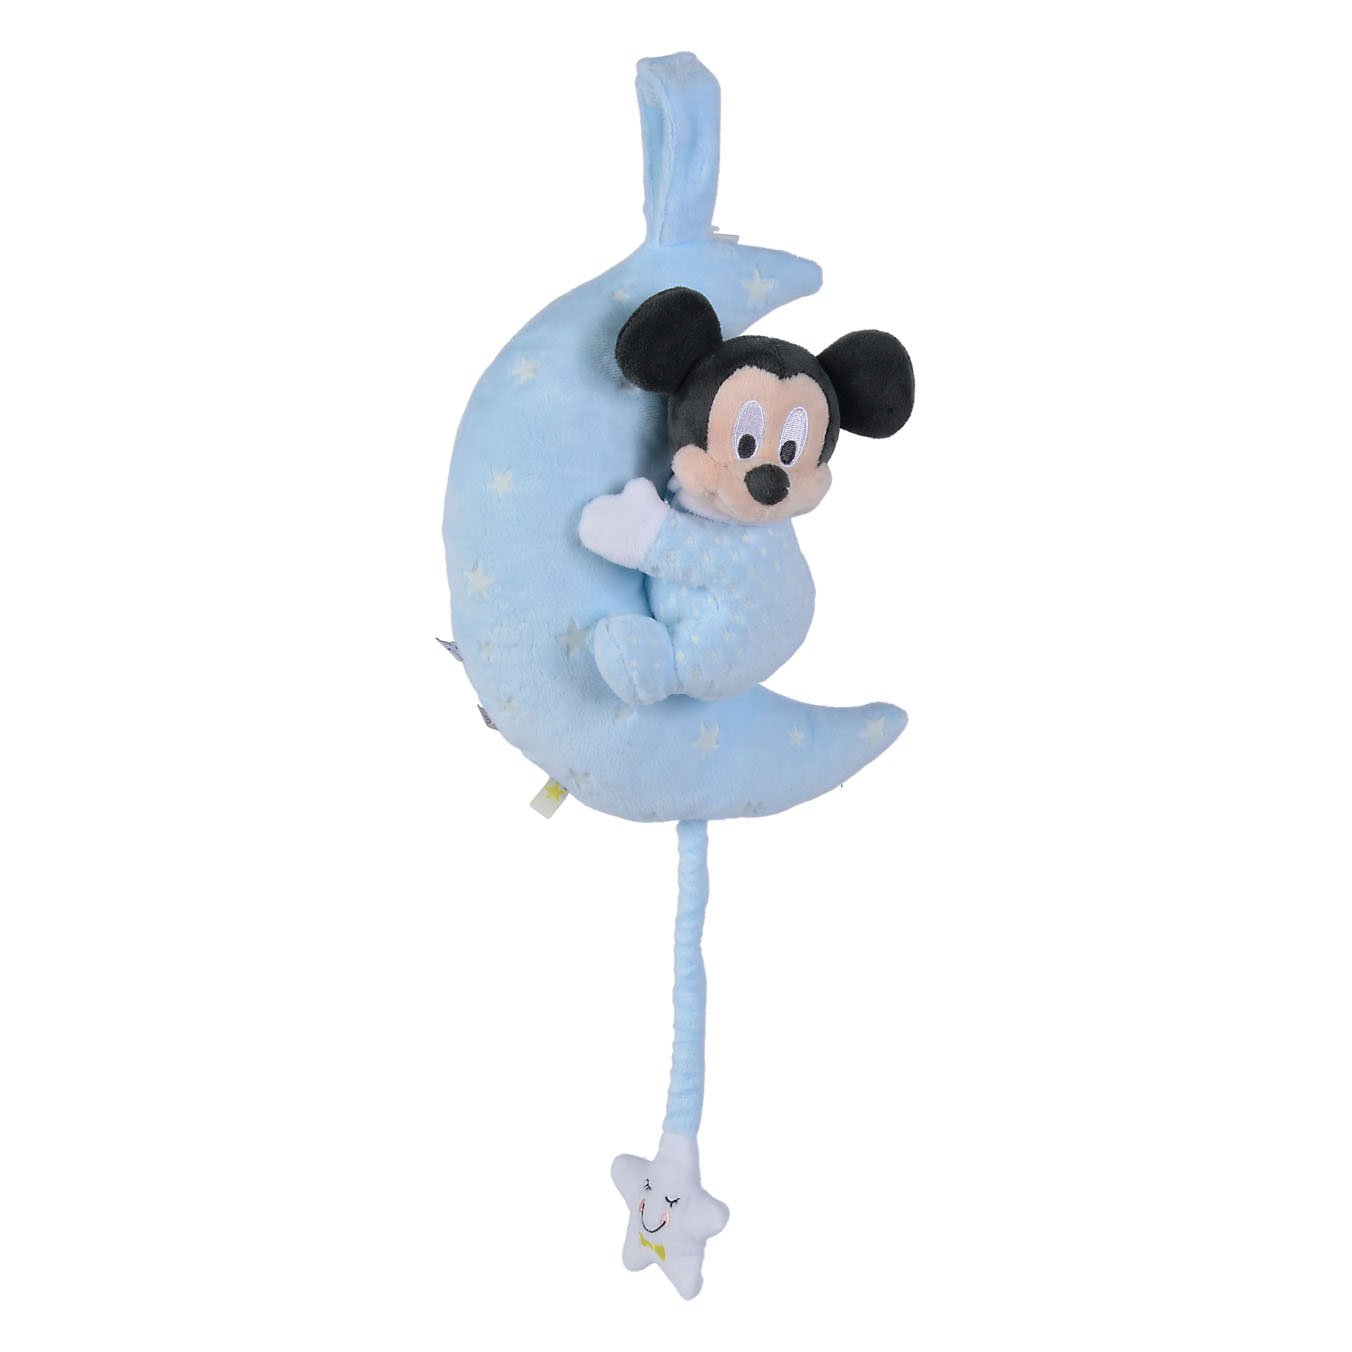 Voetzool Denk vooruit foto Disney Muziekmobiel Mickey Mouse | Thimble Toys